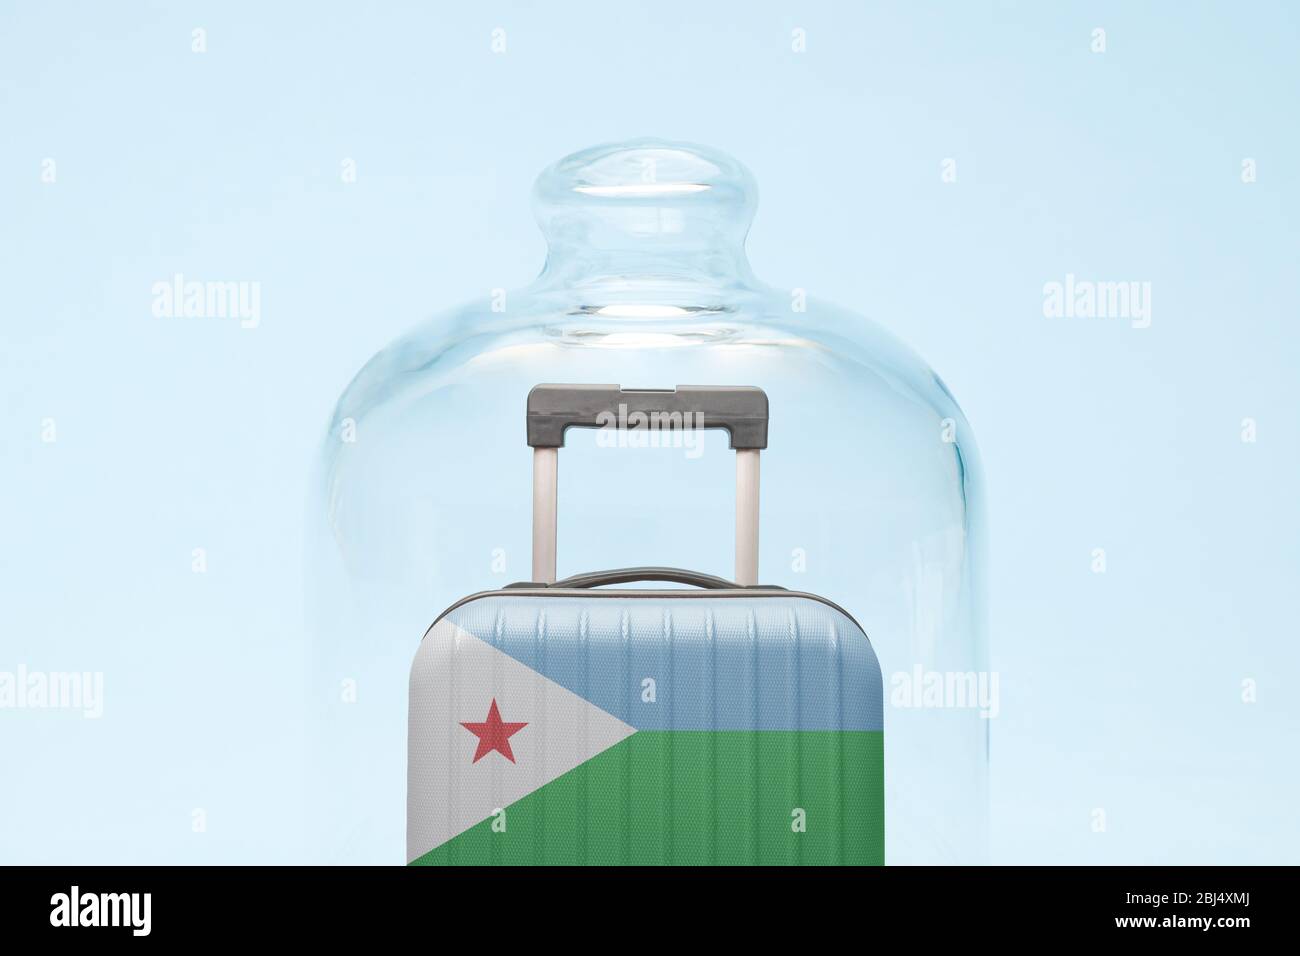 Suitcase with Djibouti flag design in quarantine minimal creative coronavirus travel restriction concept. Stock Photo